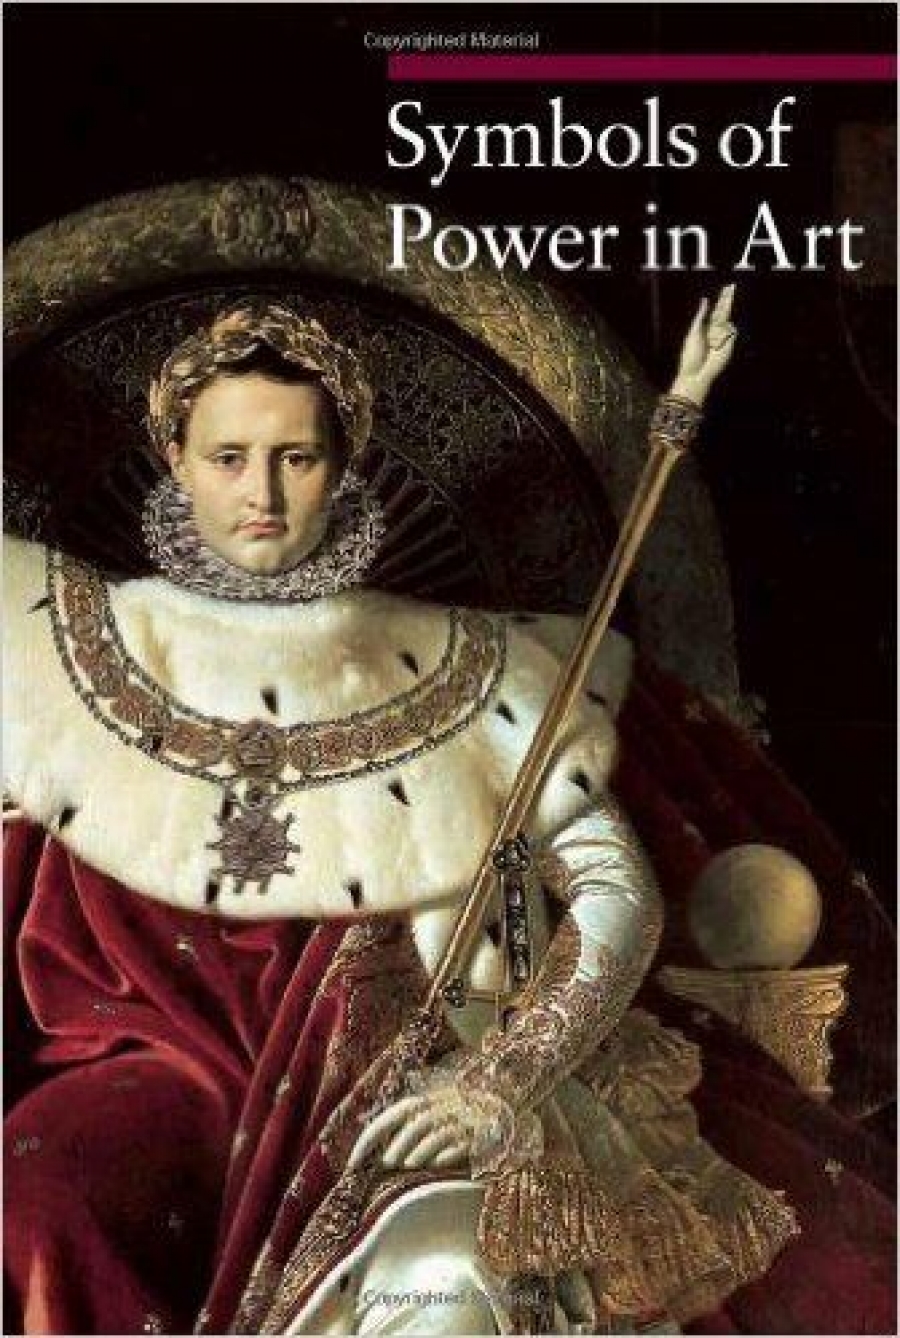 Garnier-Pelle, Nicole Symbols of Power in Art 